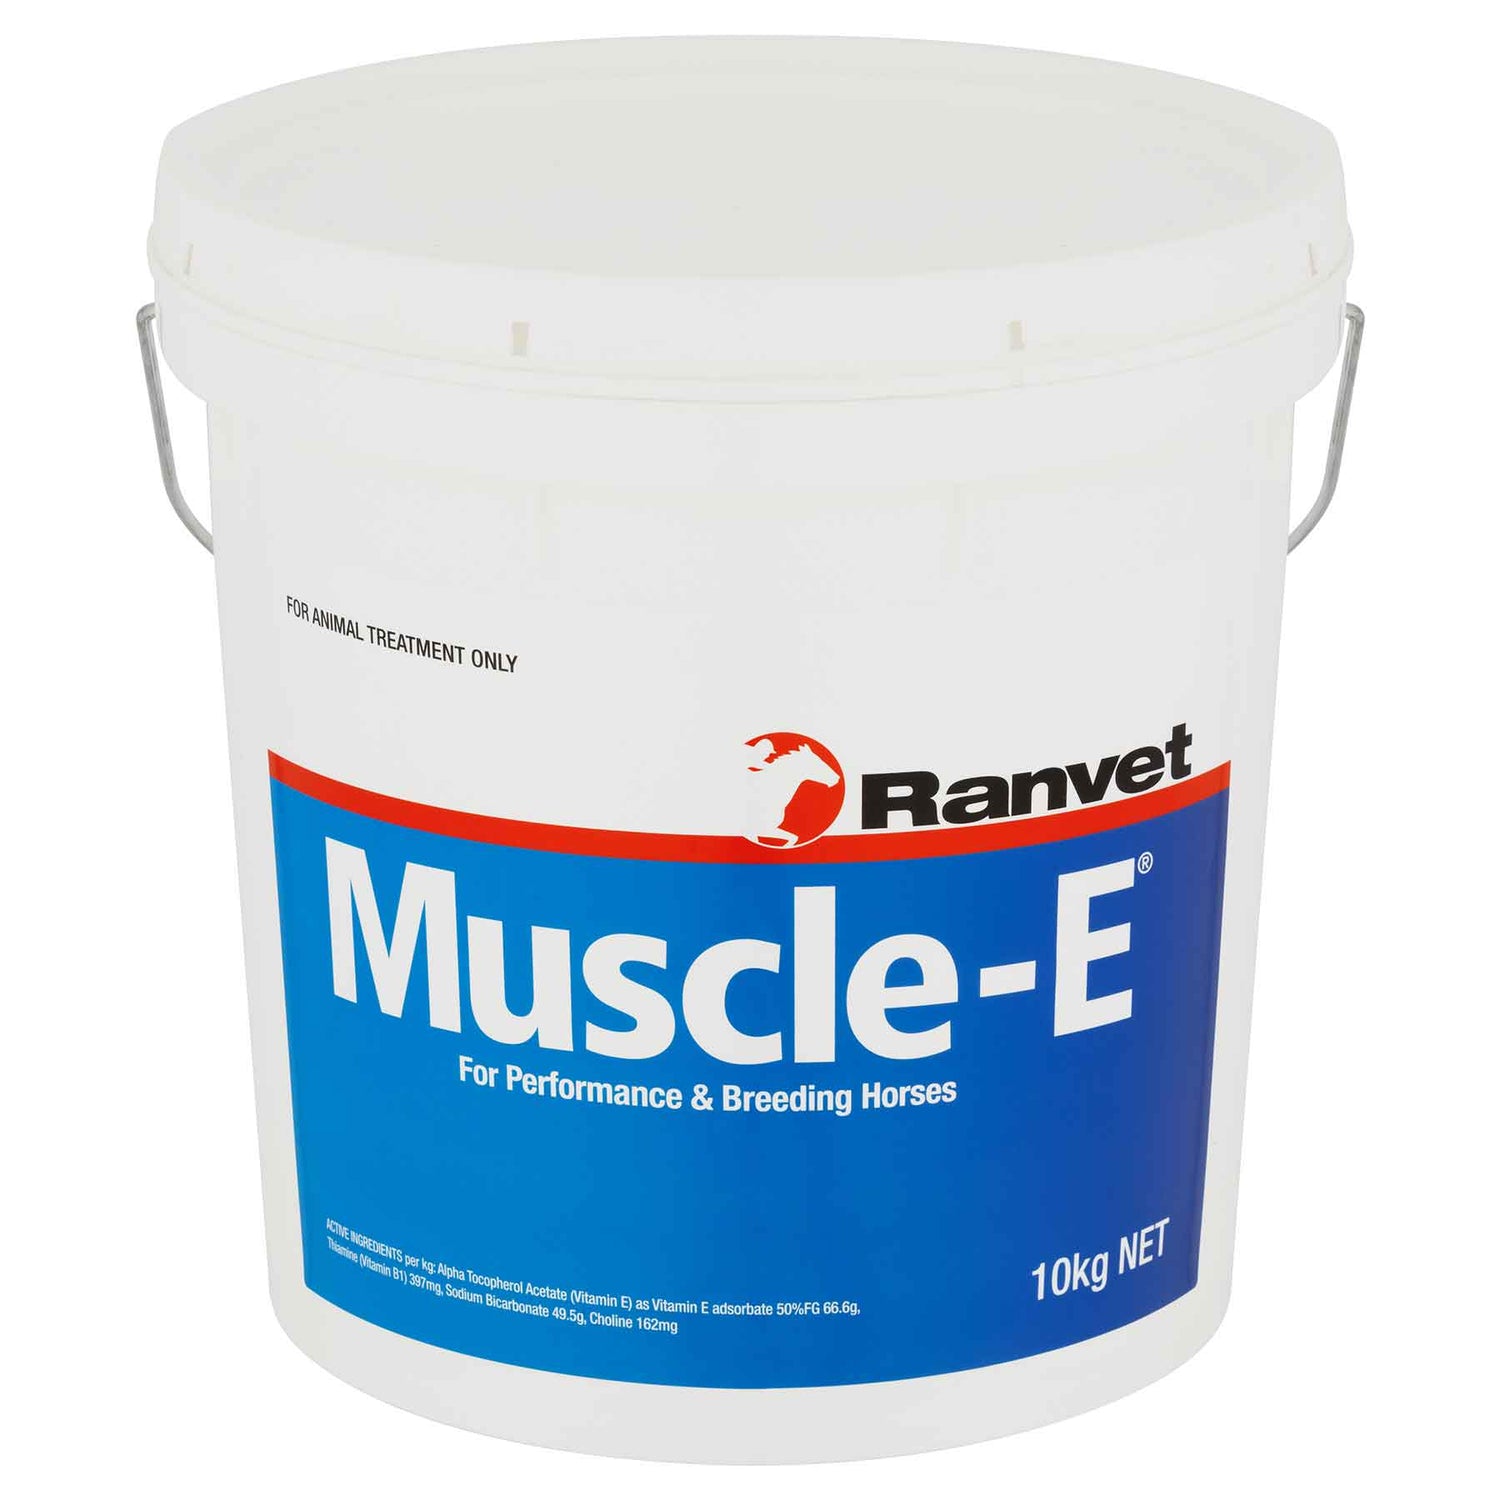 Ranvet Muscle E - Animalcare Supplies